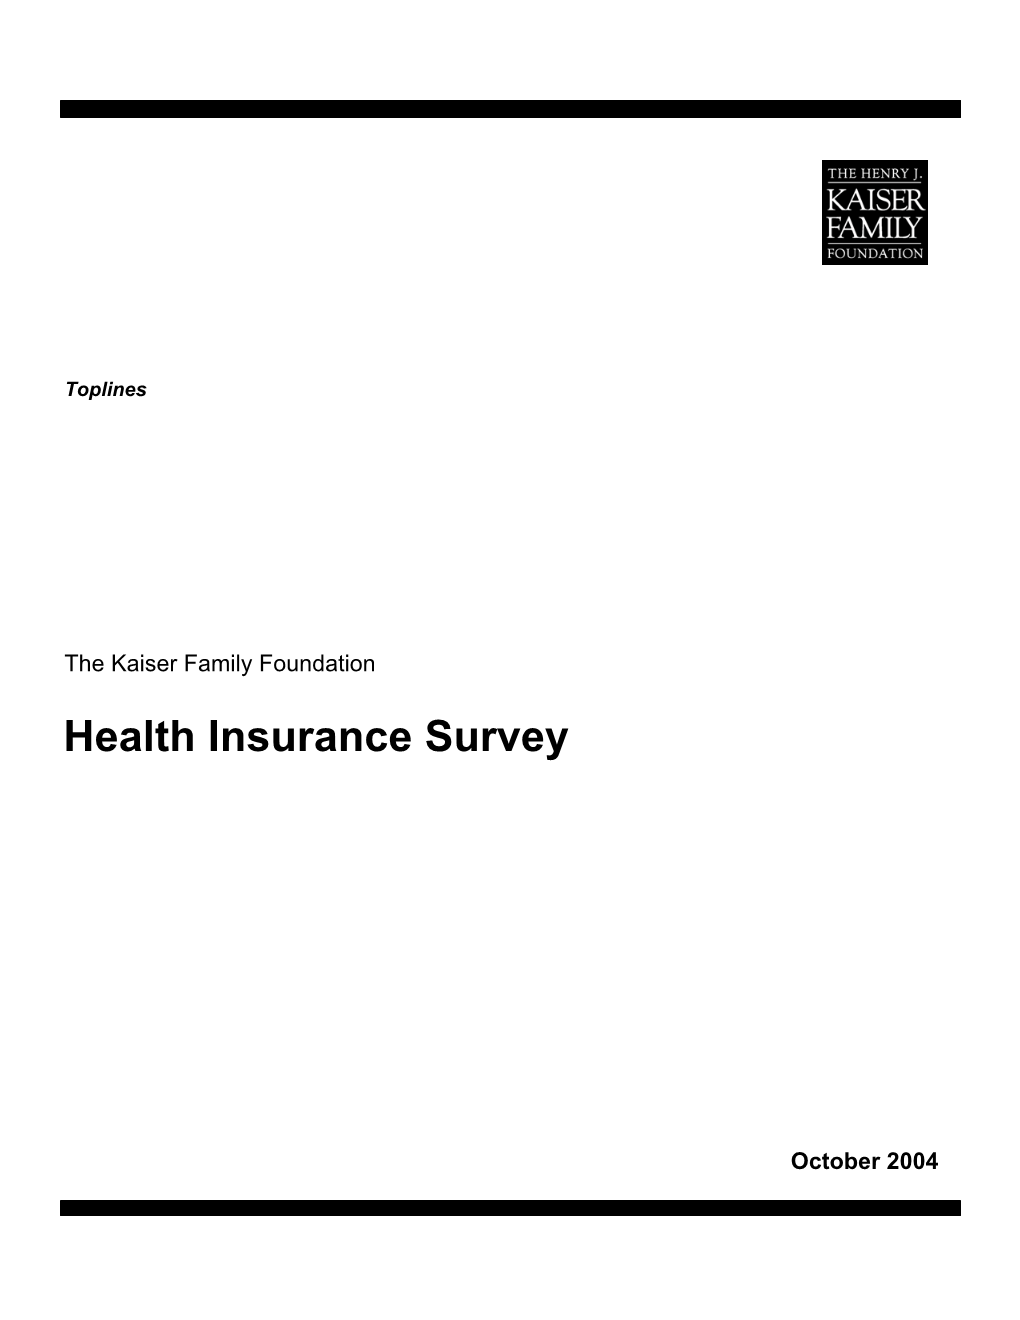 Health Insurance Survey